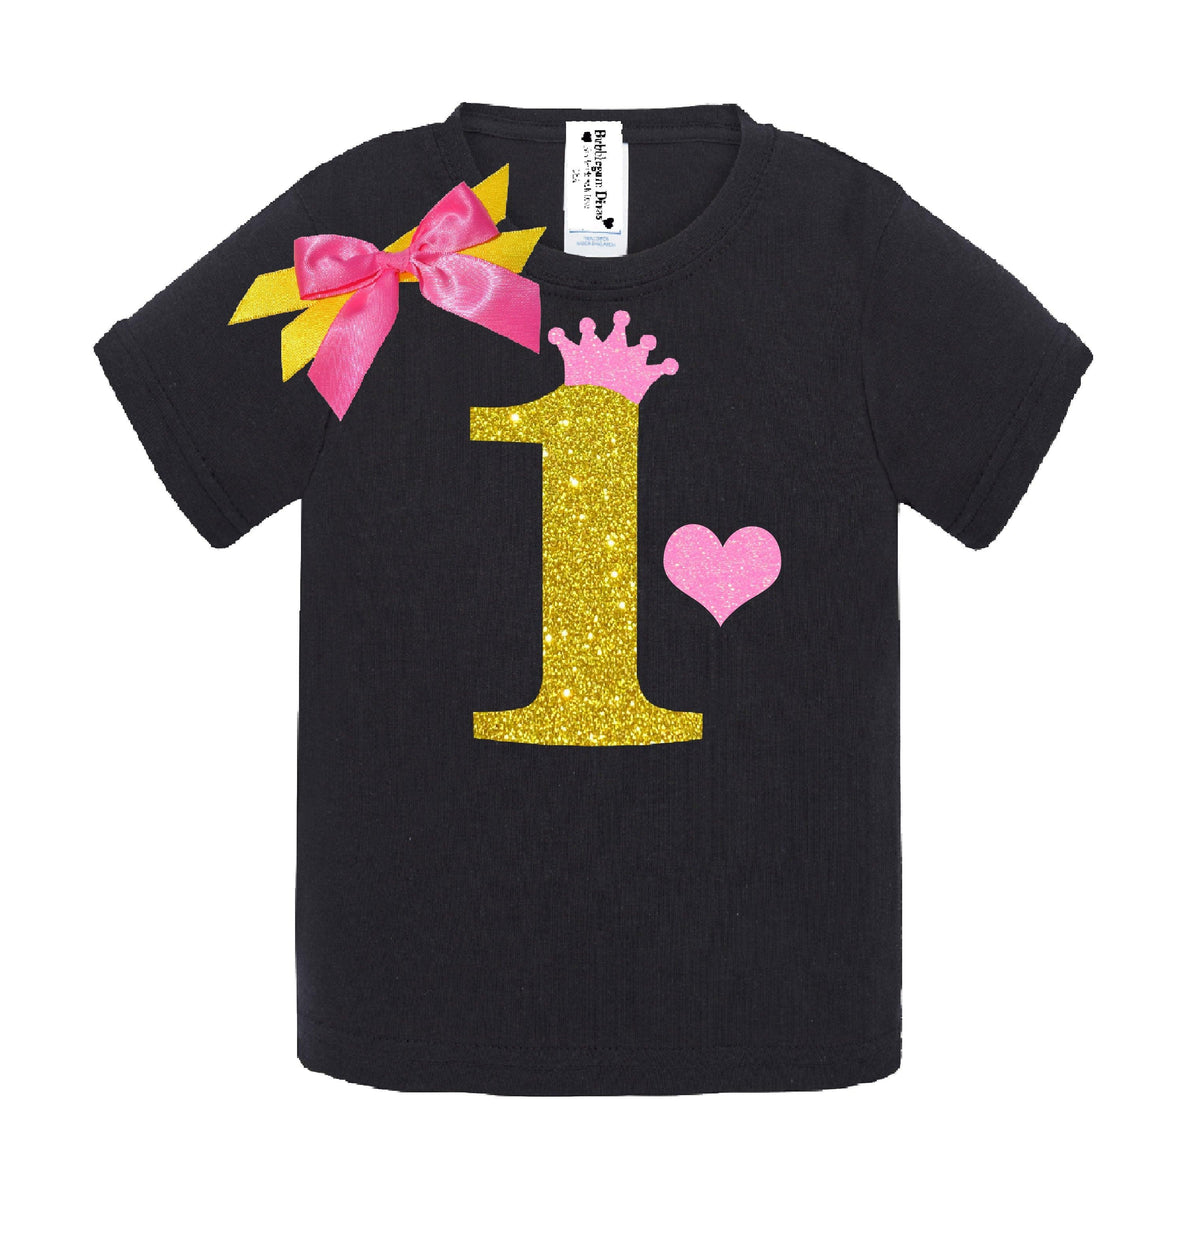 Gold Sparkle Diva 1st Birthday Outfit for Baby Girls - Bubblegum Divas 